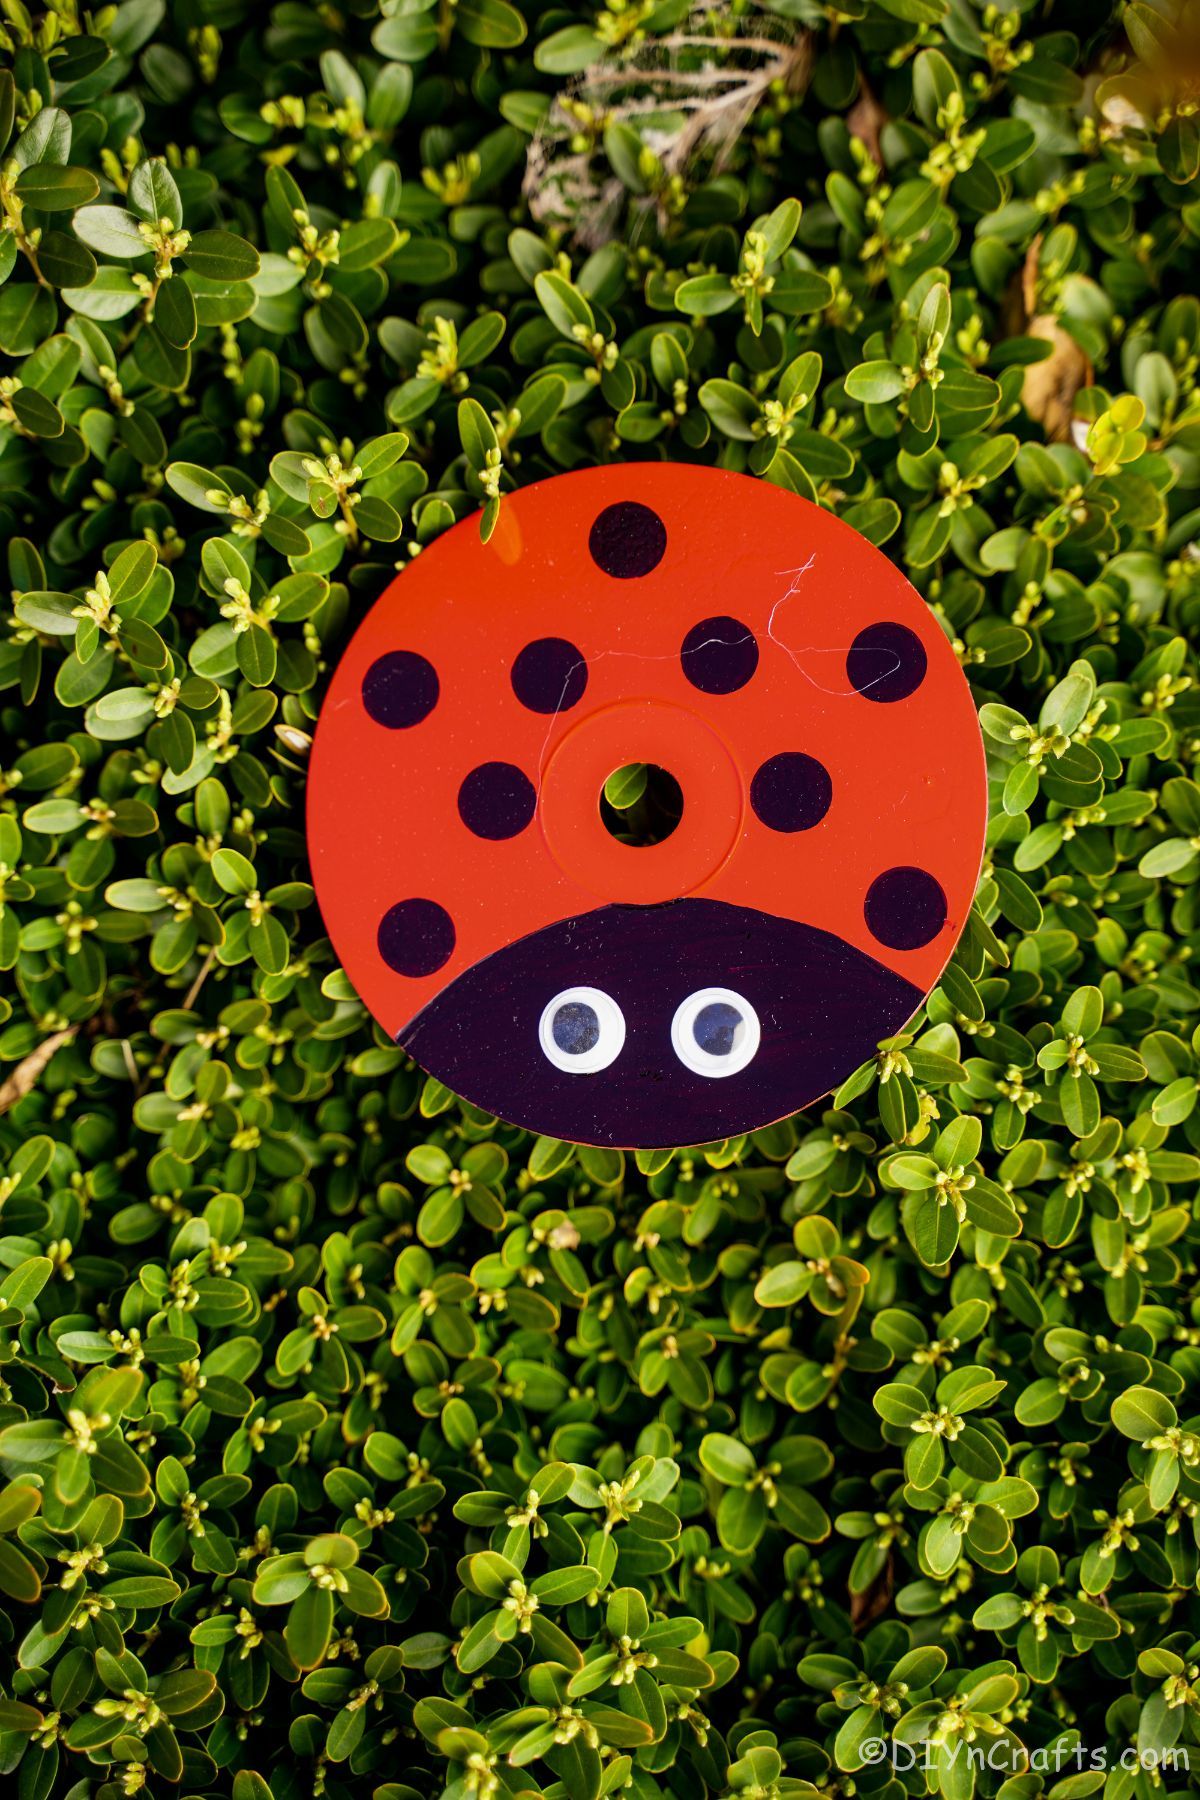 upcycled cd ladybug on clover